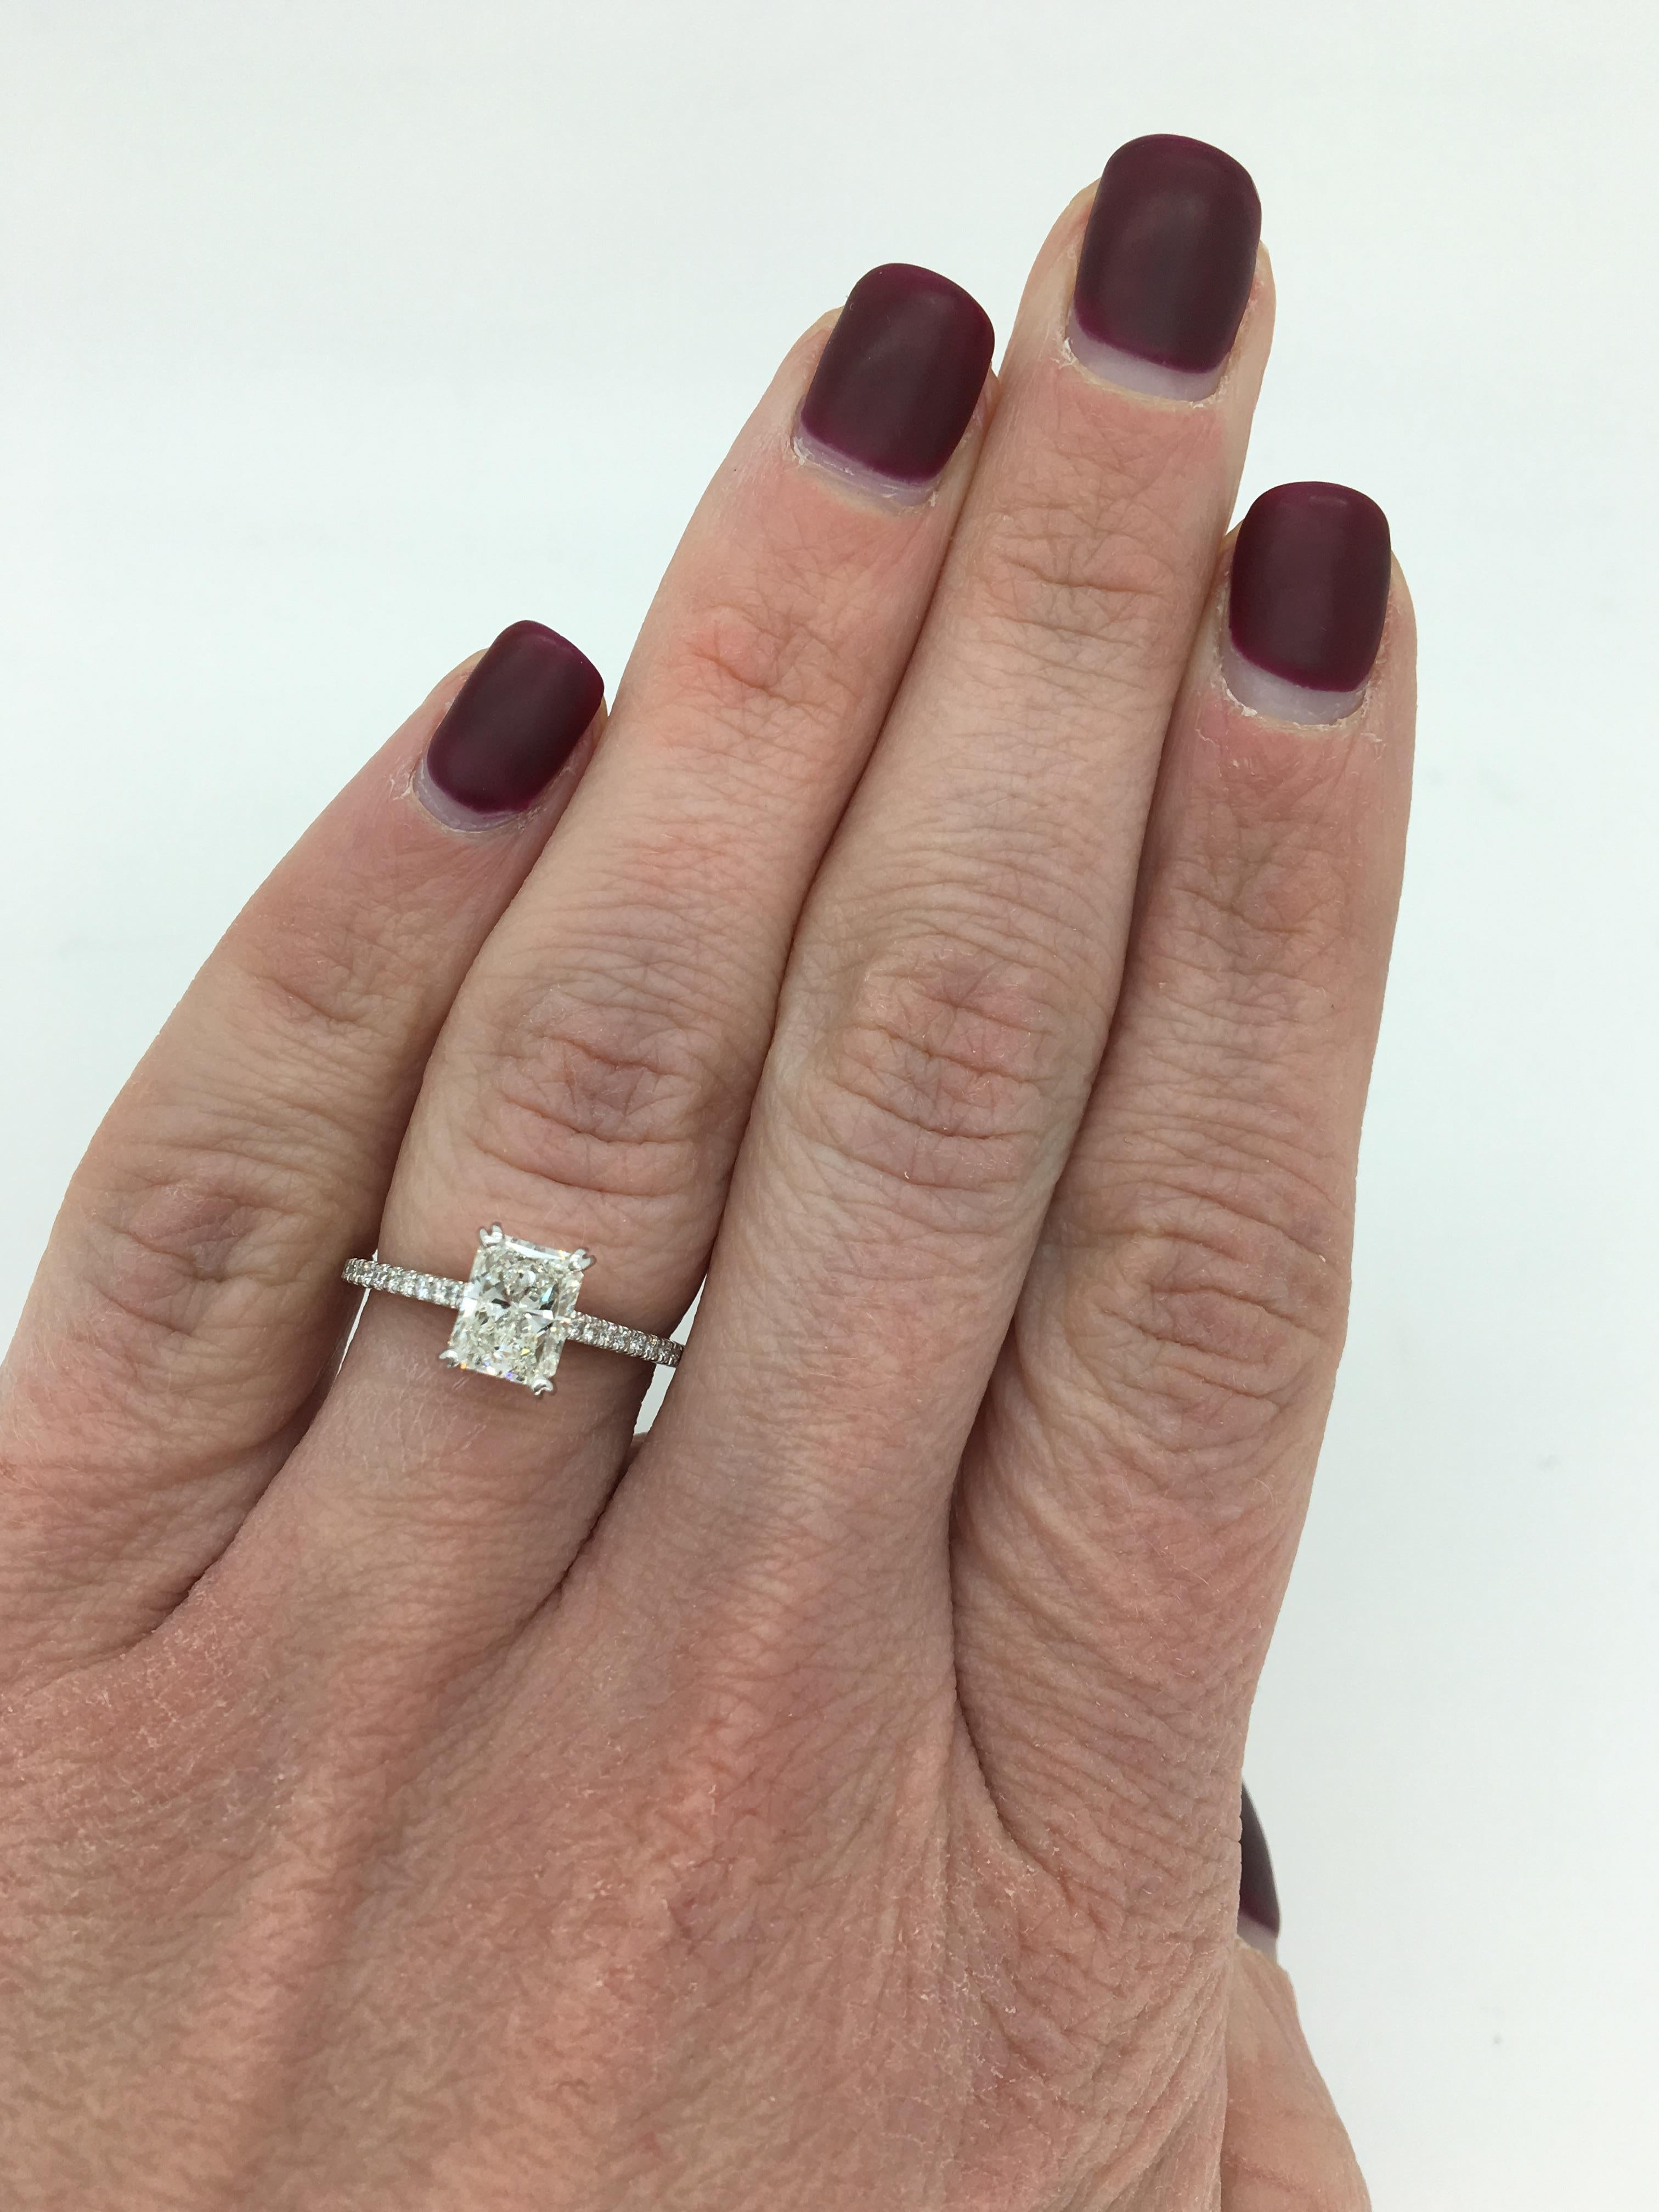 Stunning AGS Certified Sylvie diamond ring featuring approximately 1.322CTW of diamonds set in 14K white gold.

AGS Certified 104076147007
 
Center Diamond Carat Weight: 1.022CT
Center Diamond Cut: Cut Cornered Rectangular Brilliant
Center Diamond